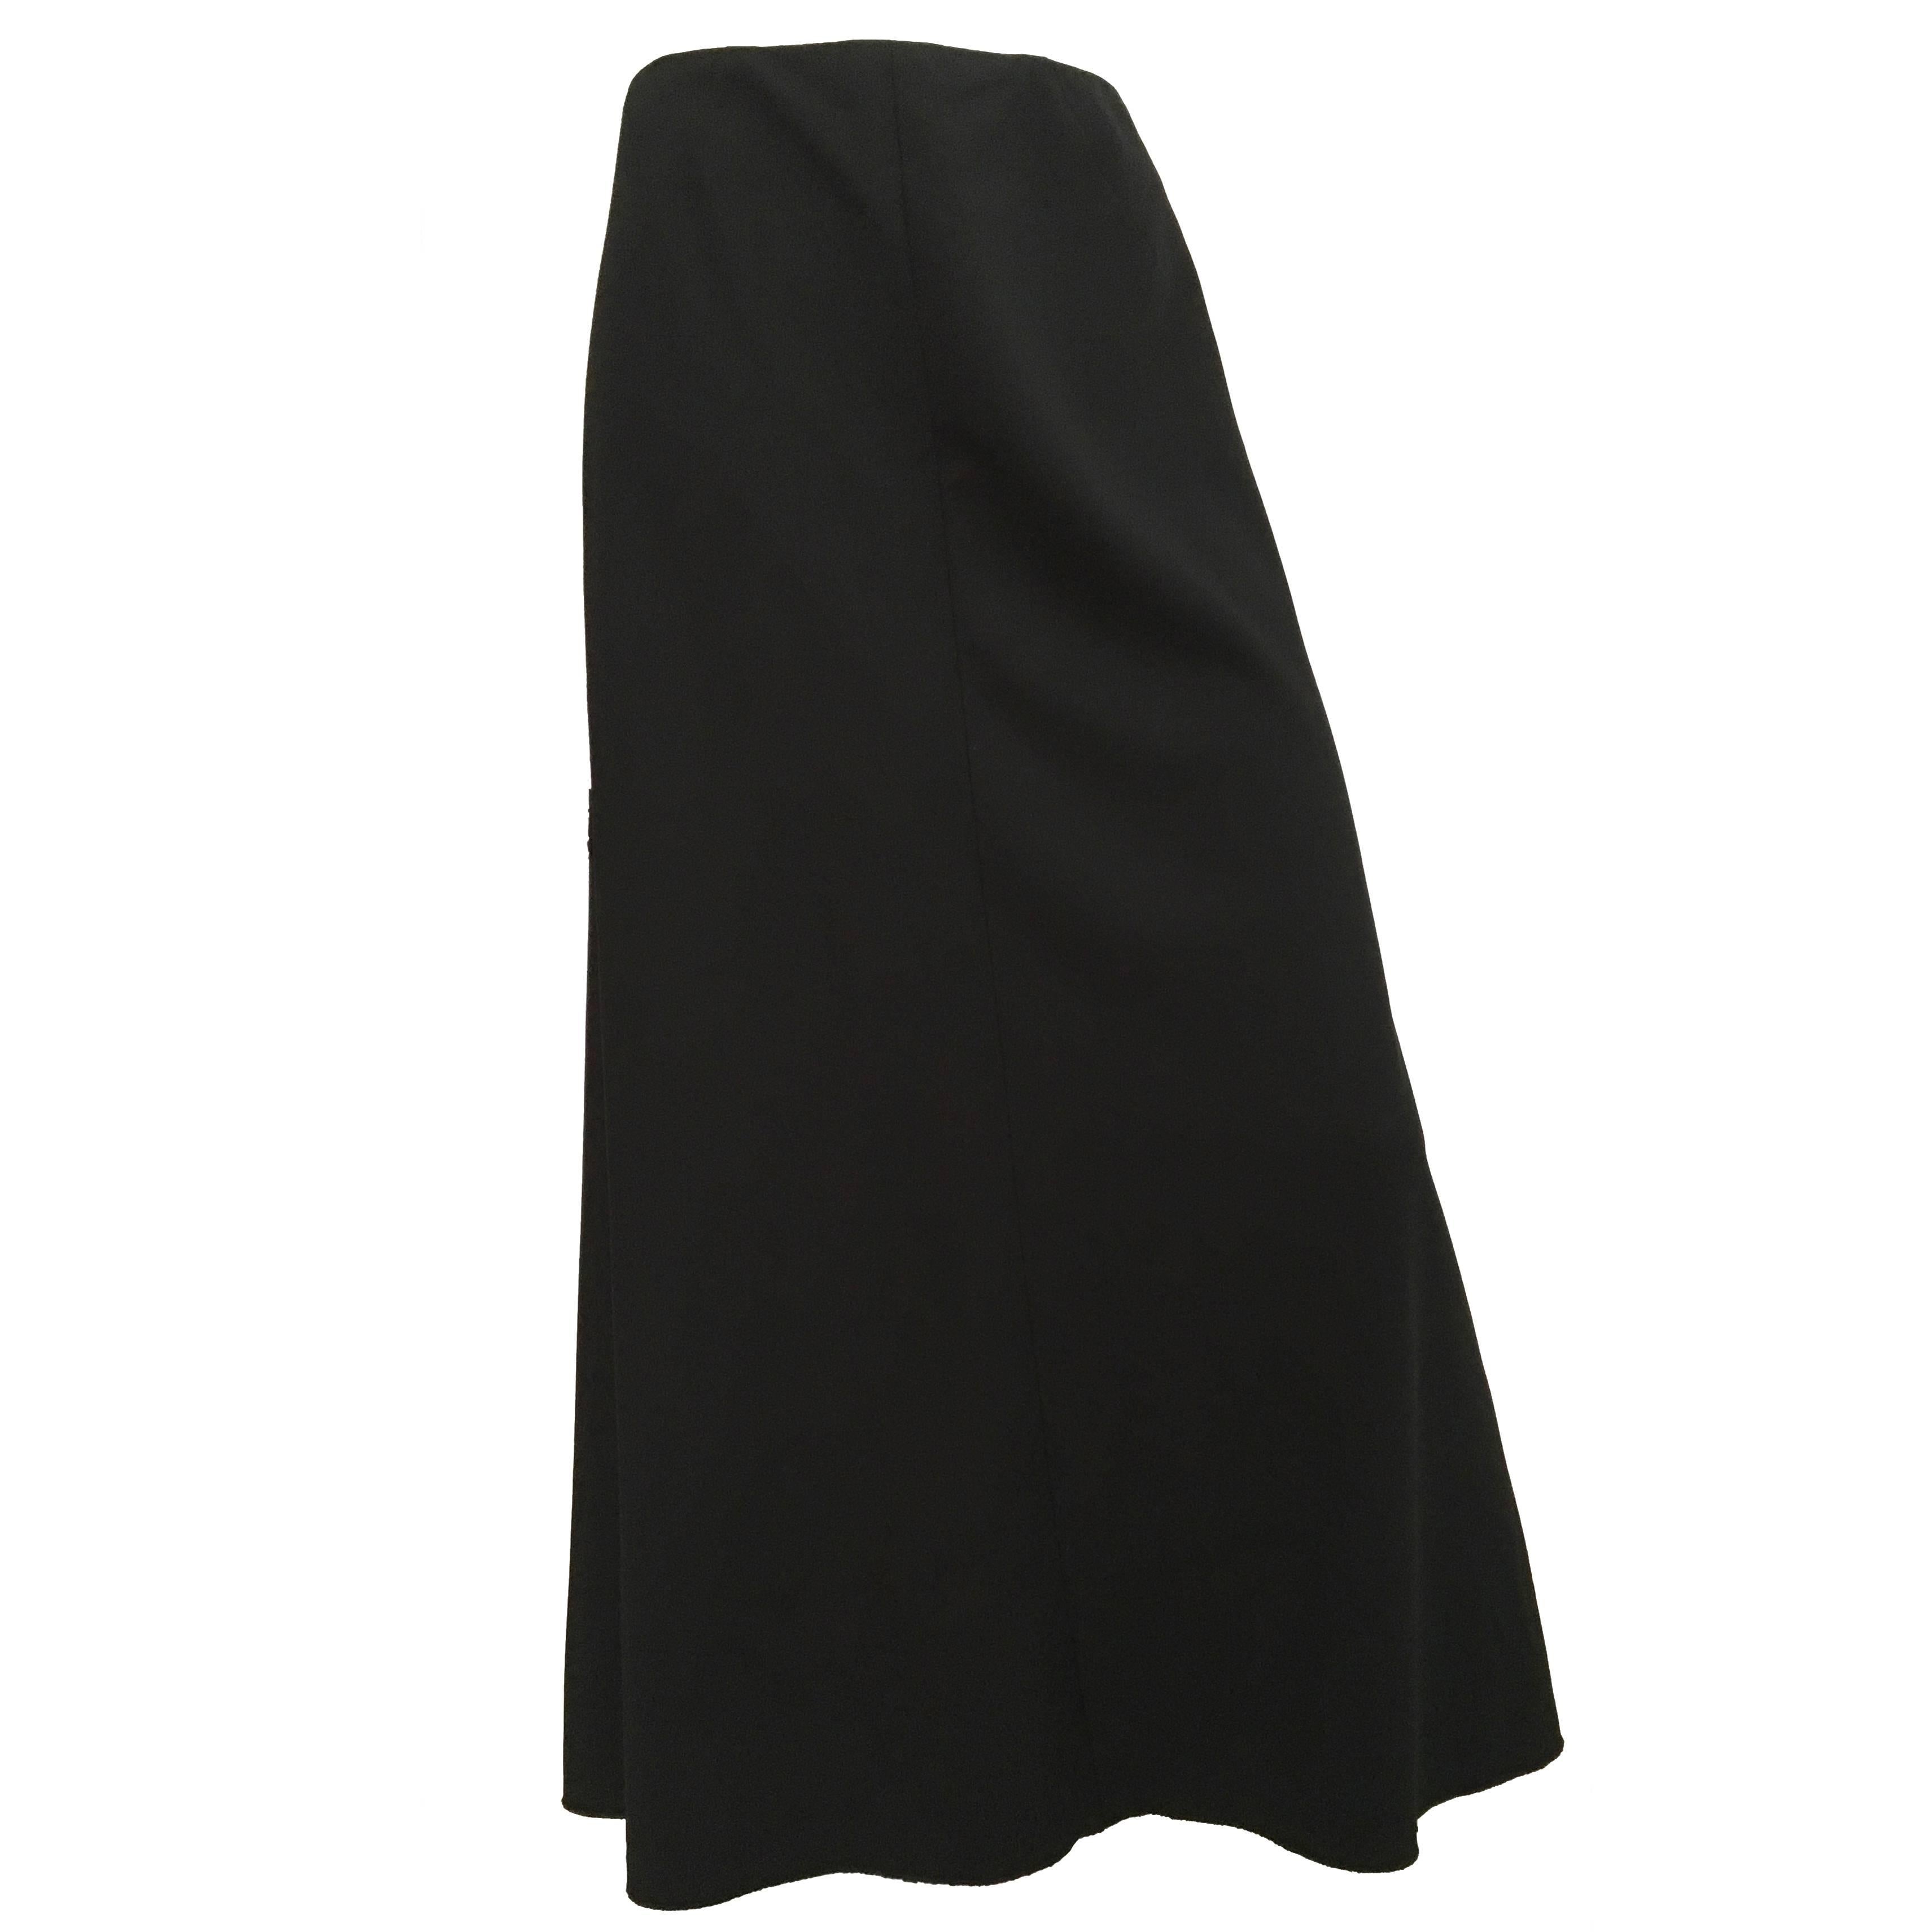 Chanel 80s Black Long Wool Skirt Size 6.